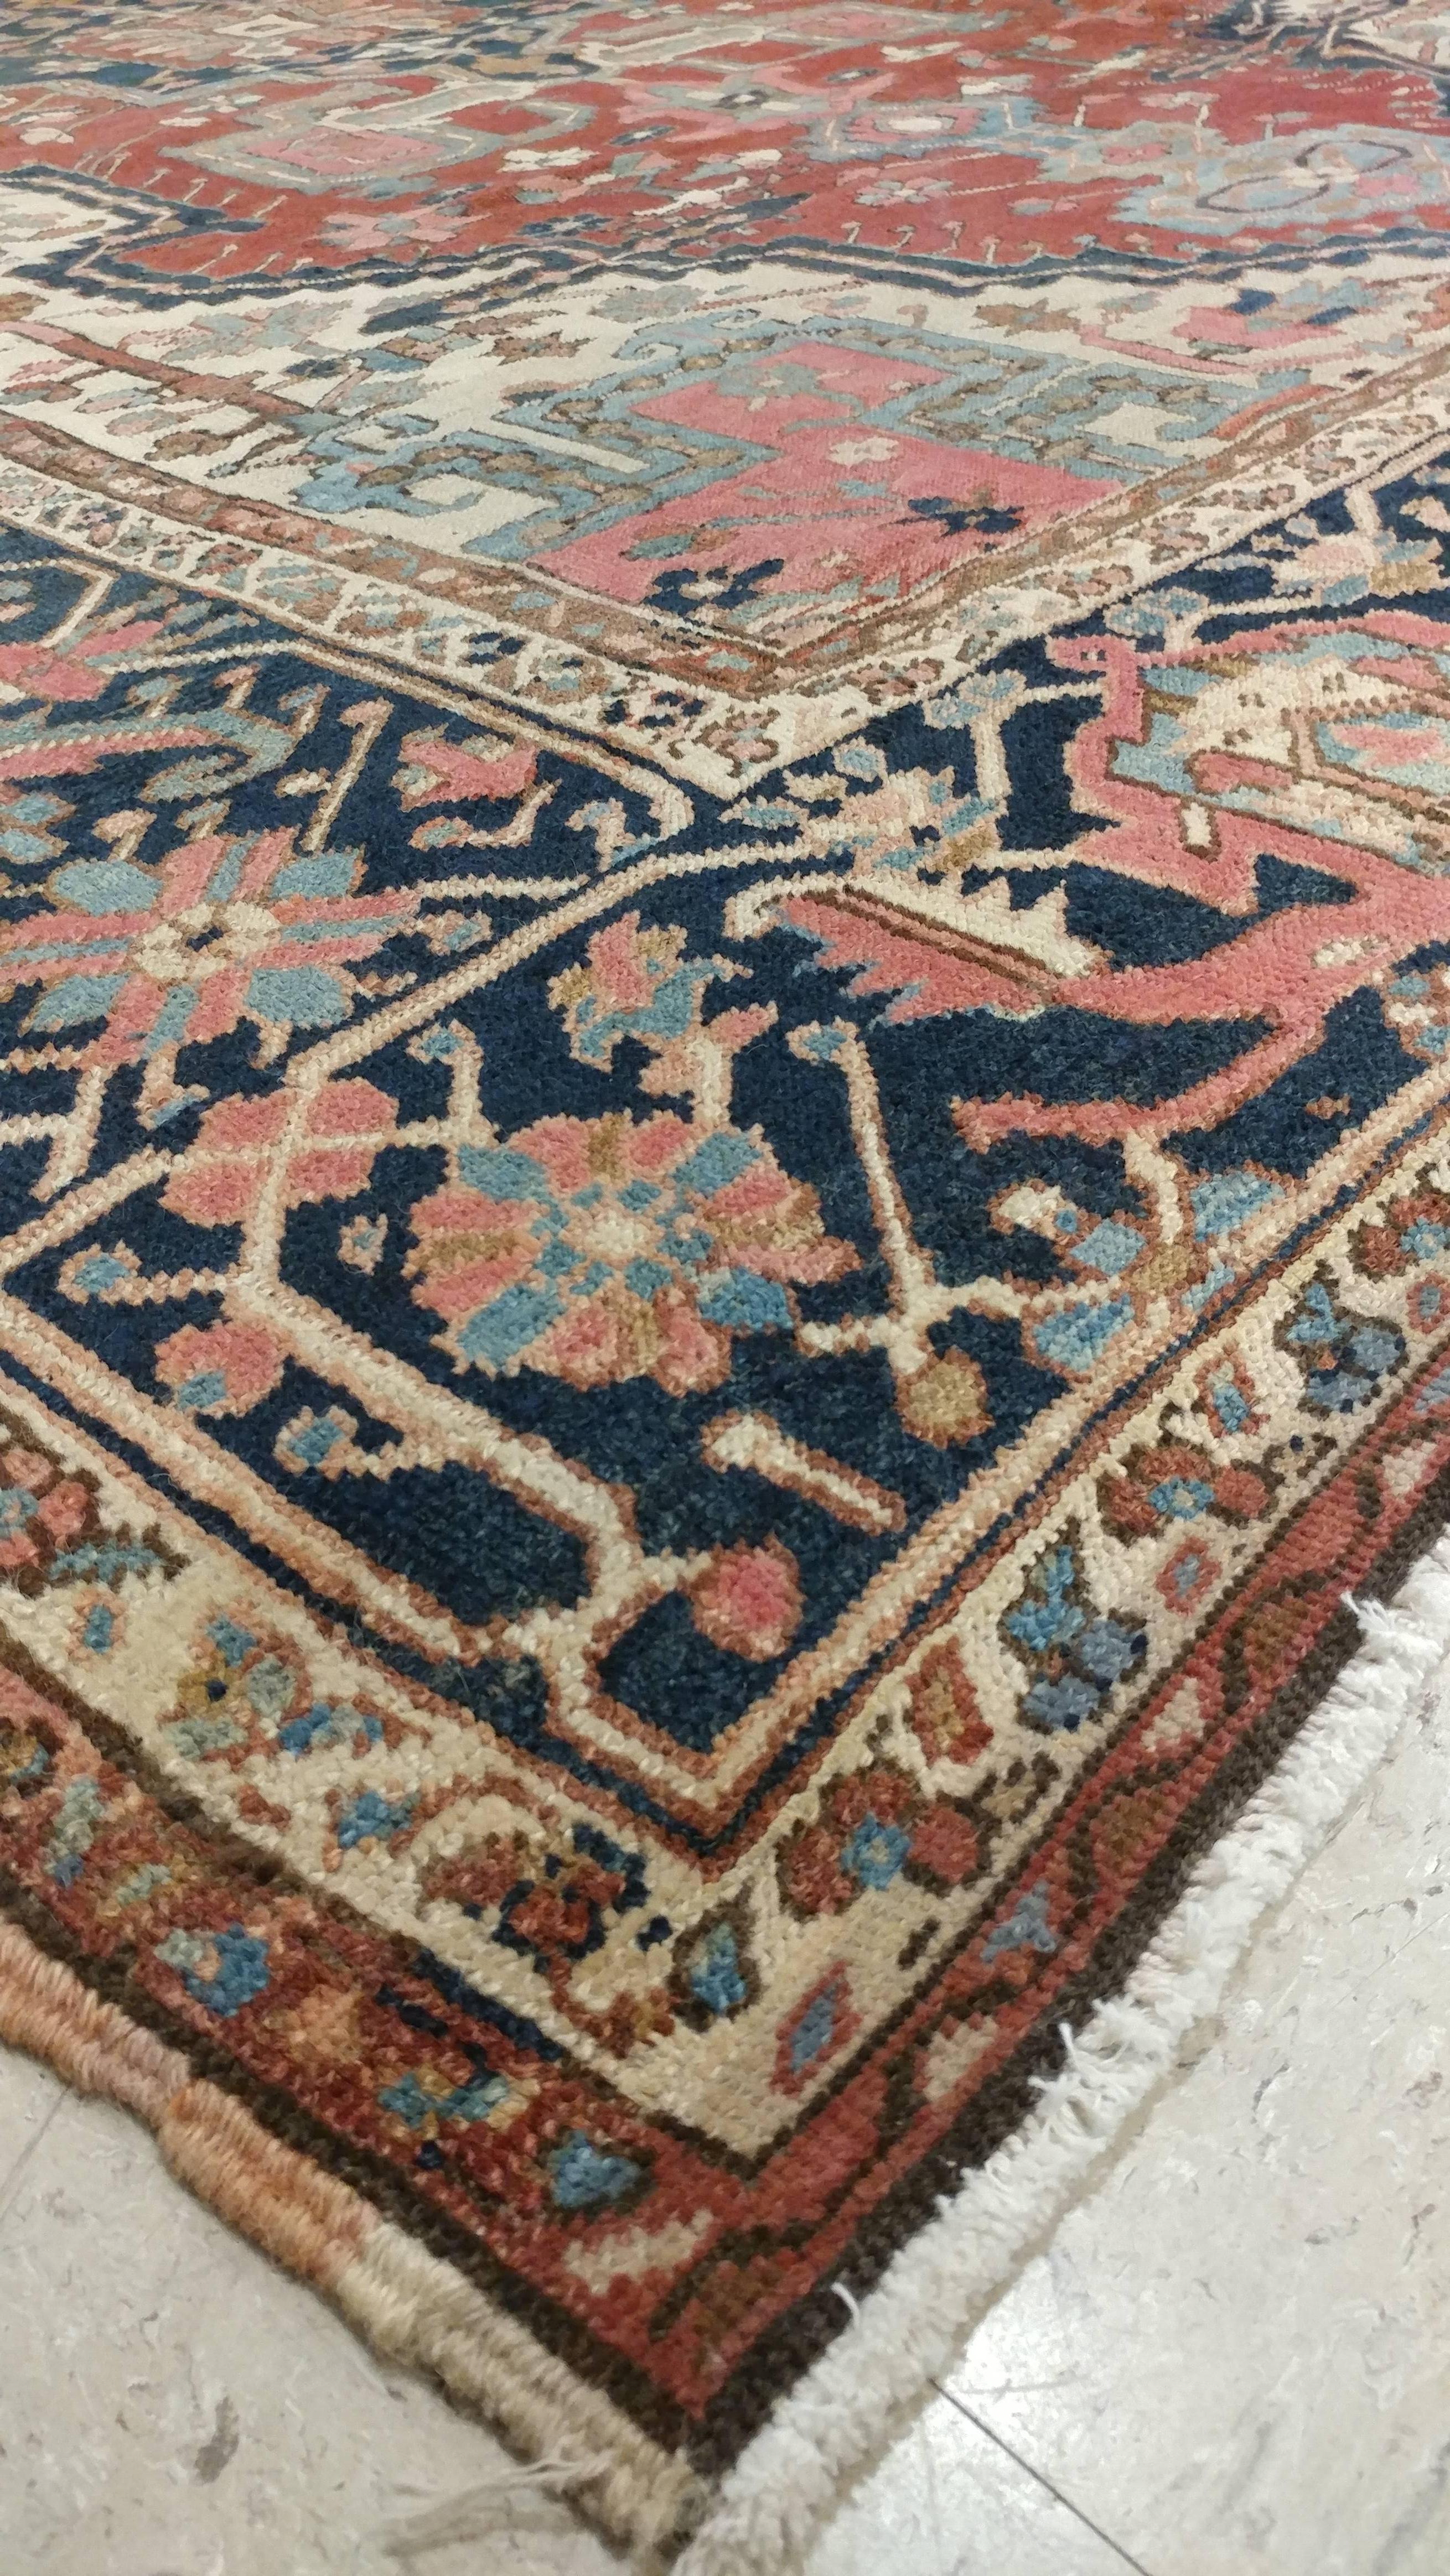 20th Century Antique Bakhshaish Carpet, Persian Handmade Rug, Rust, Navy, Ivory, Light Blue